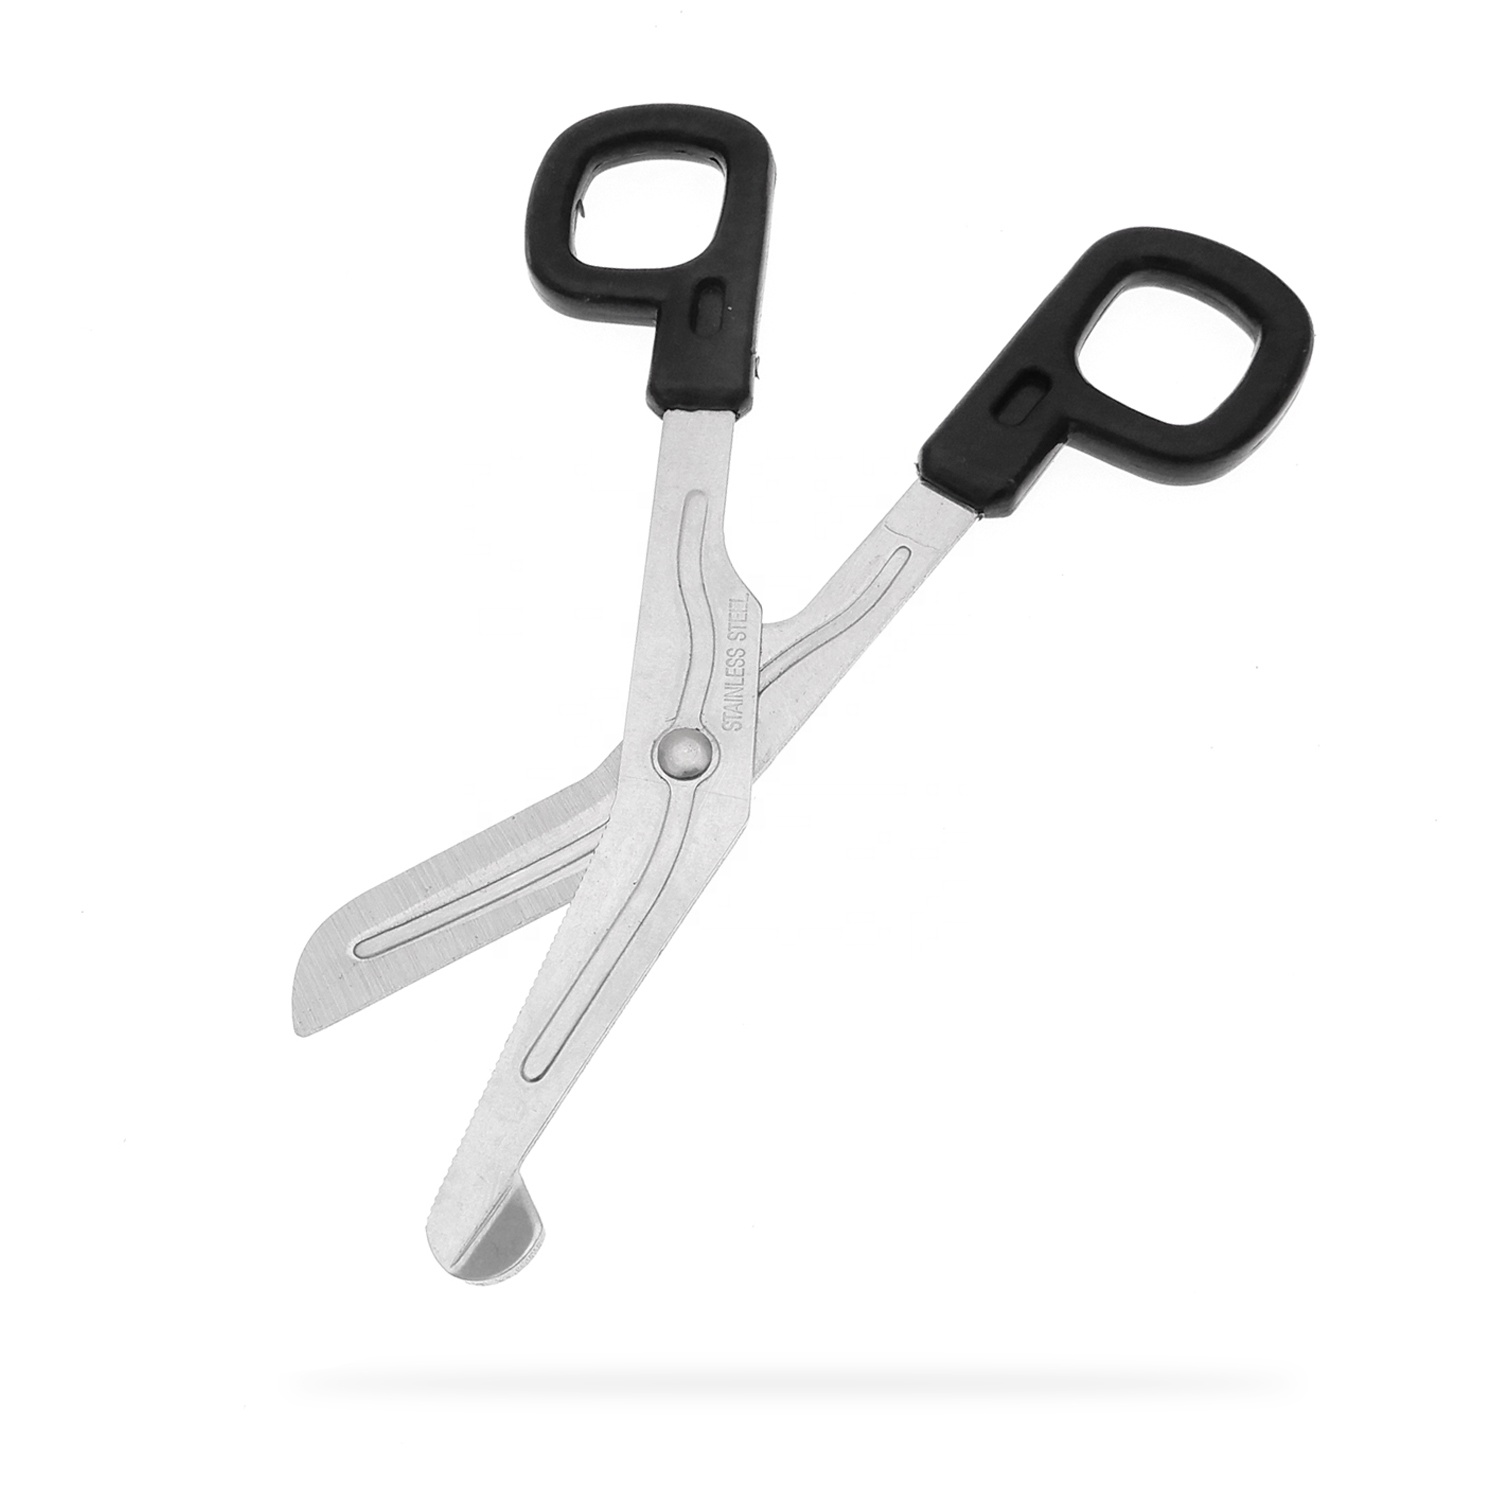 SA-001 Small Plastic Bend Scissors Black Bandage Scissors Household Stainless Steel Shears Safety Emergency Kits
